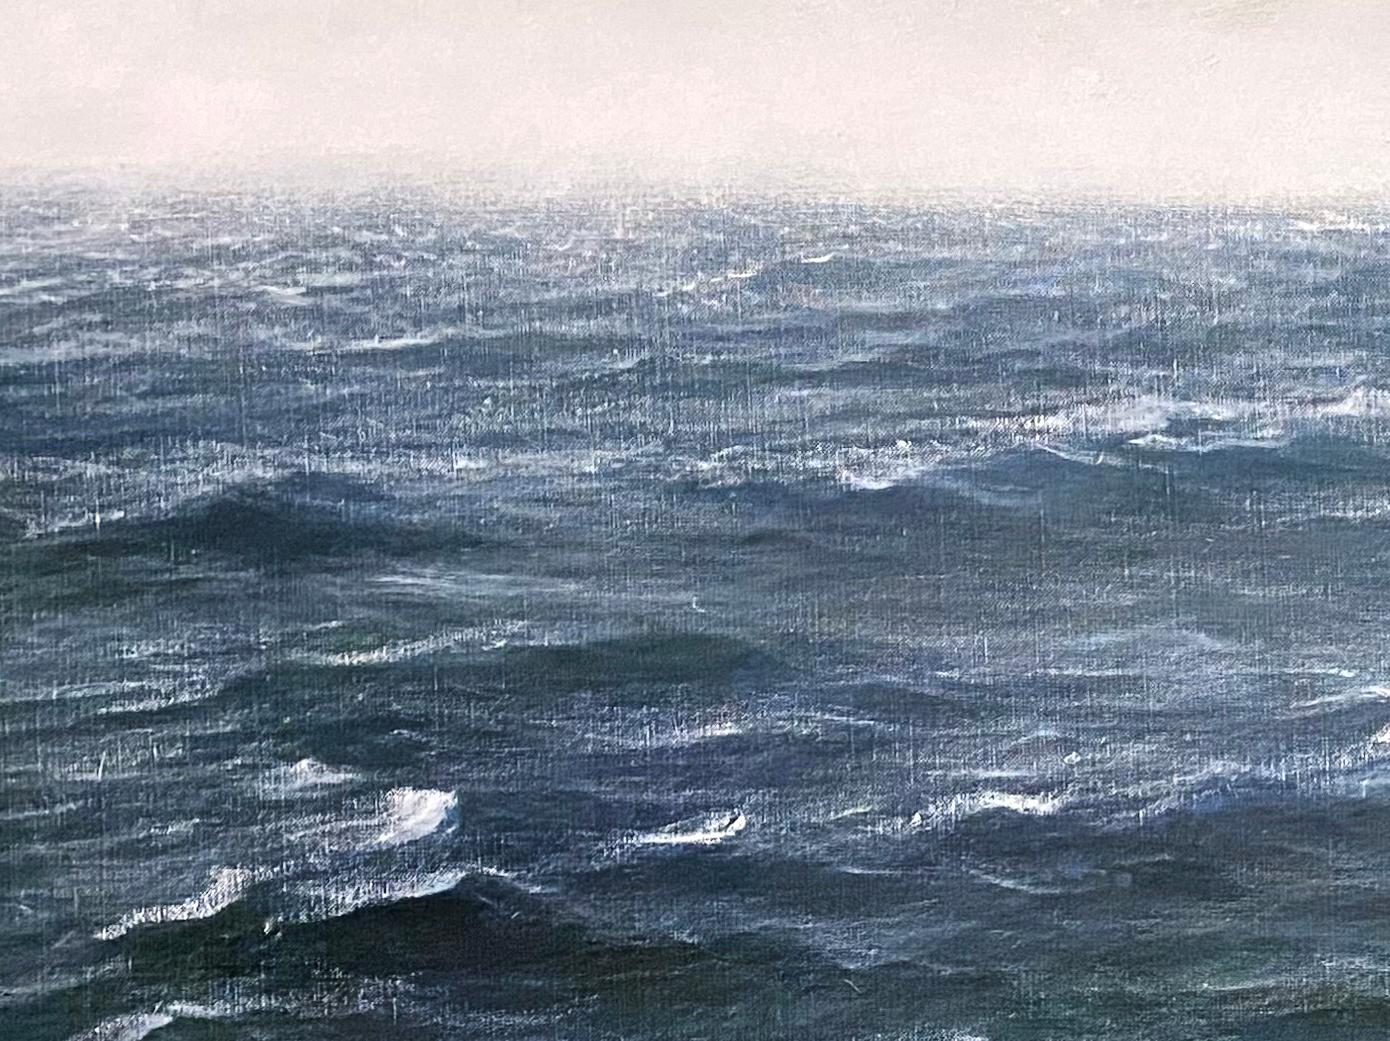 ATLANTIC SWELL 13, dark ocean, waves, stormy, photorealism, water, waterscape - Painting by Lisa Lebofsky